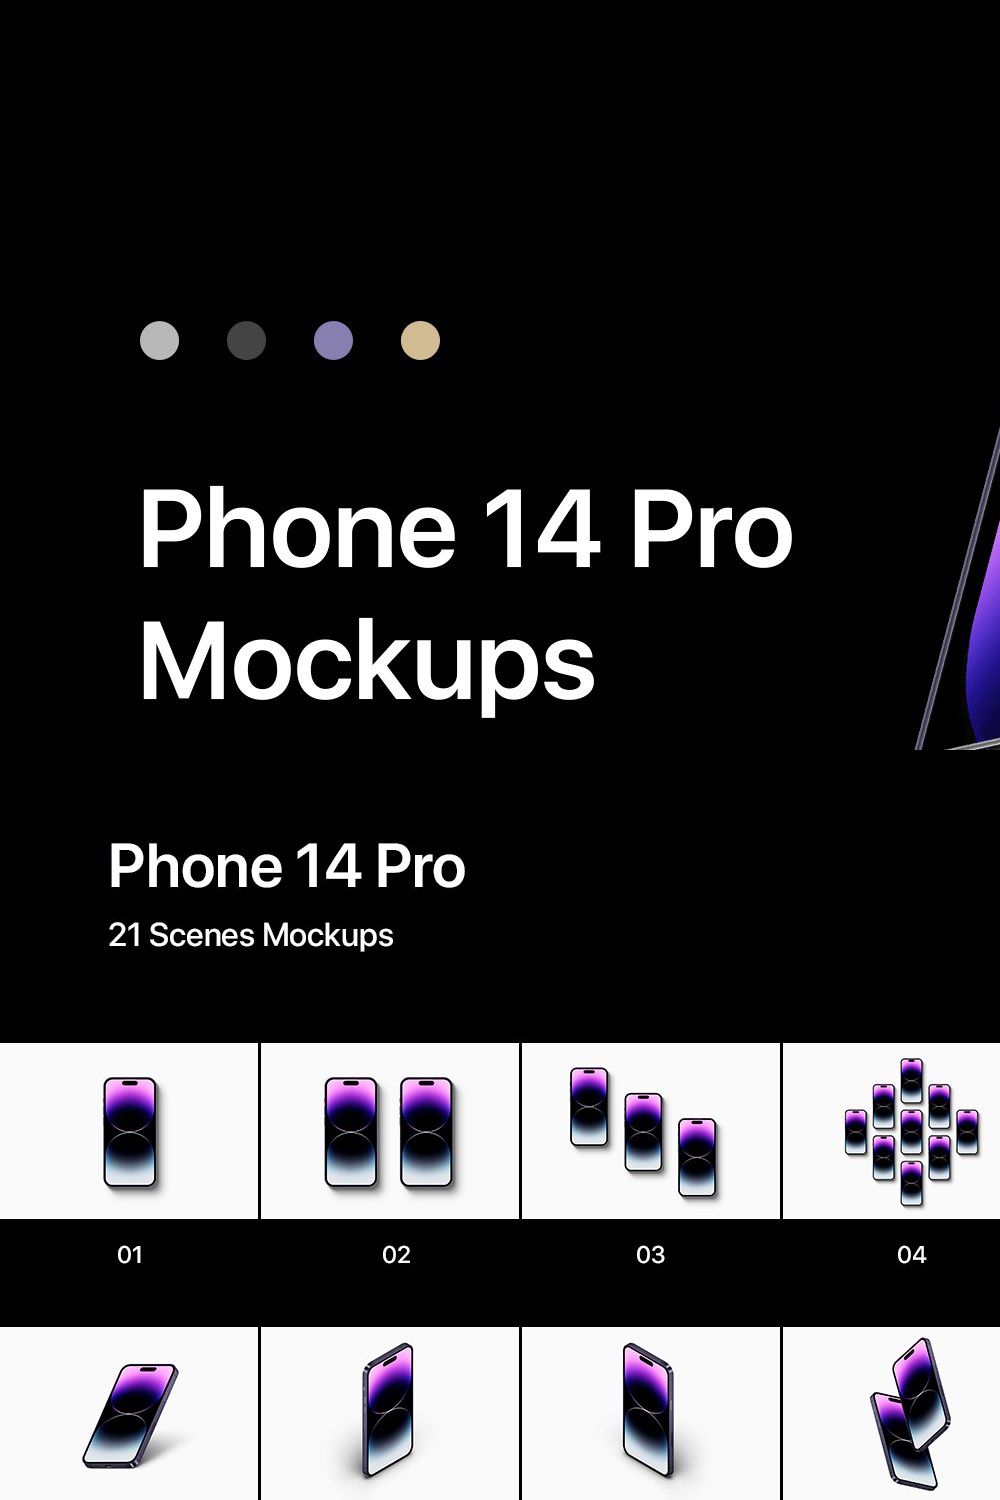 Phone 14 Pro - 21 Mockups Scenes pinterest preview image.